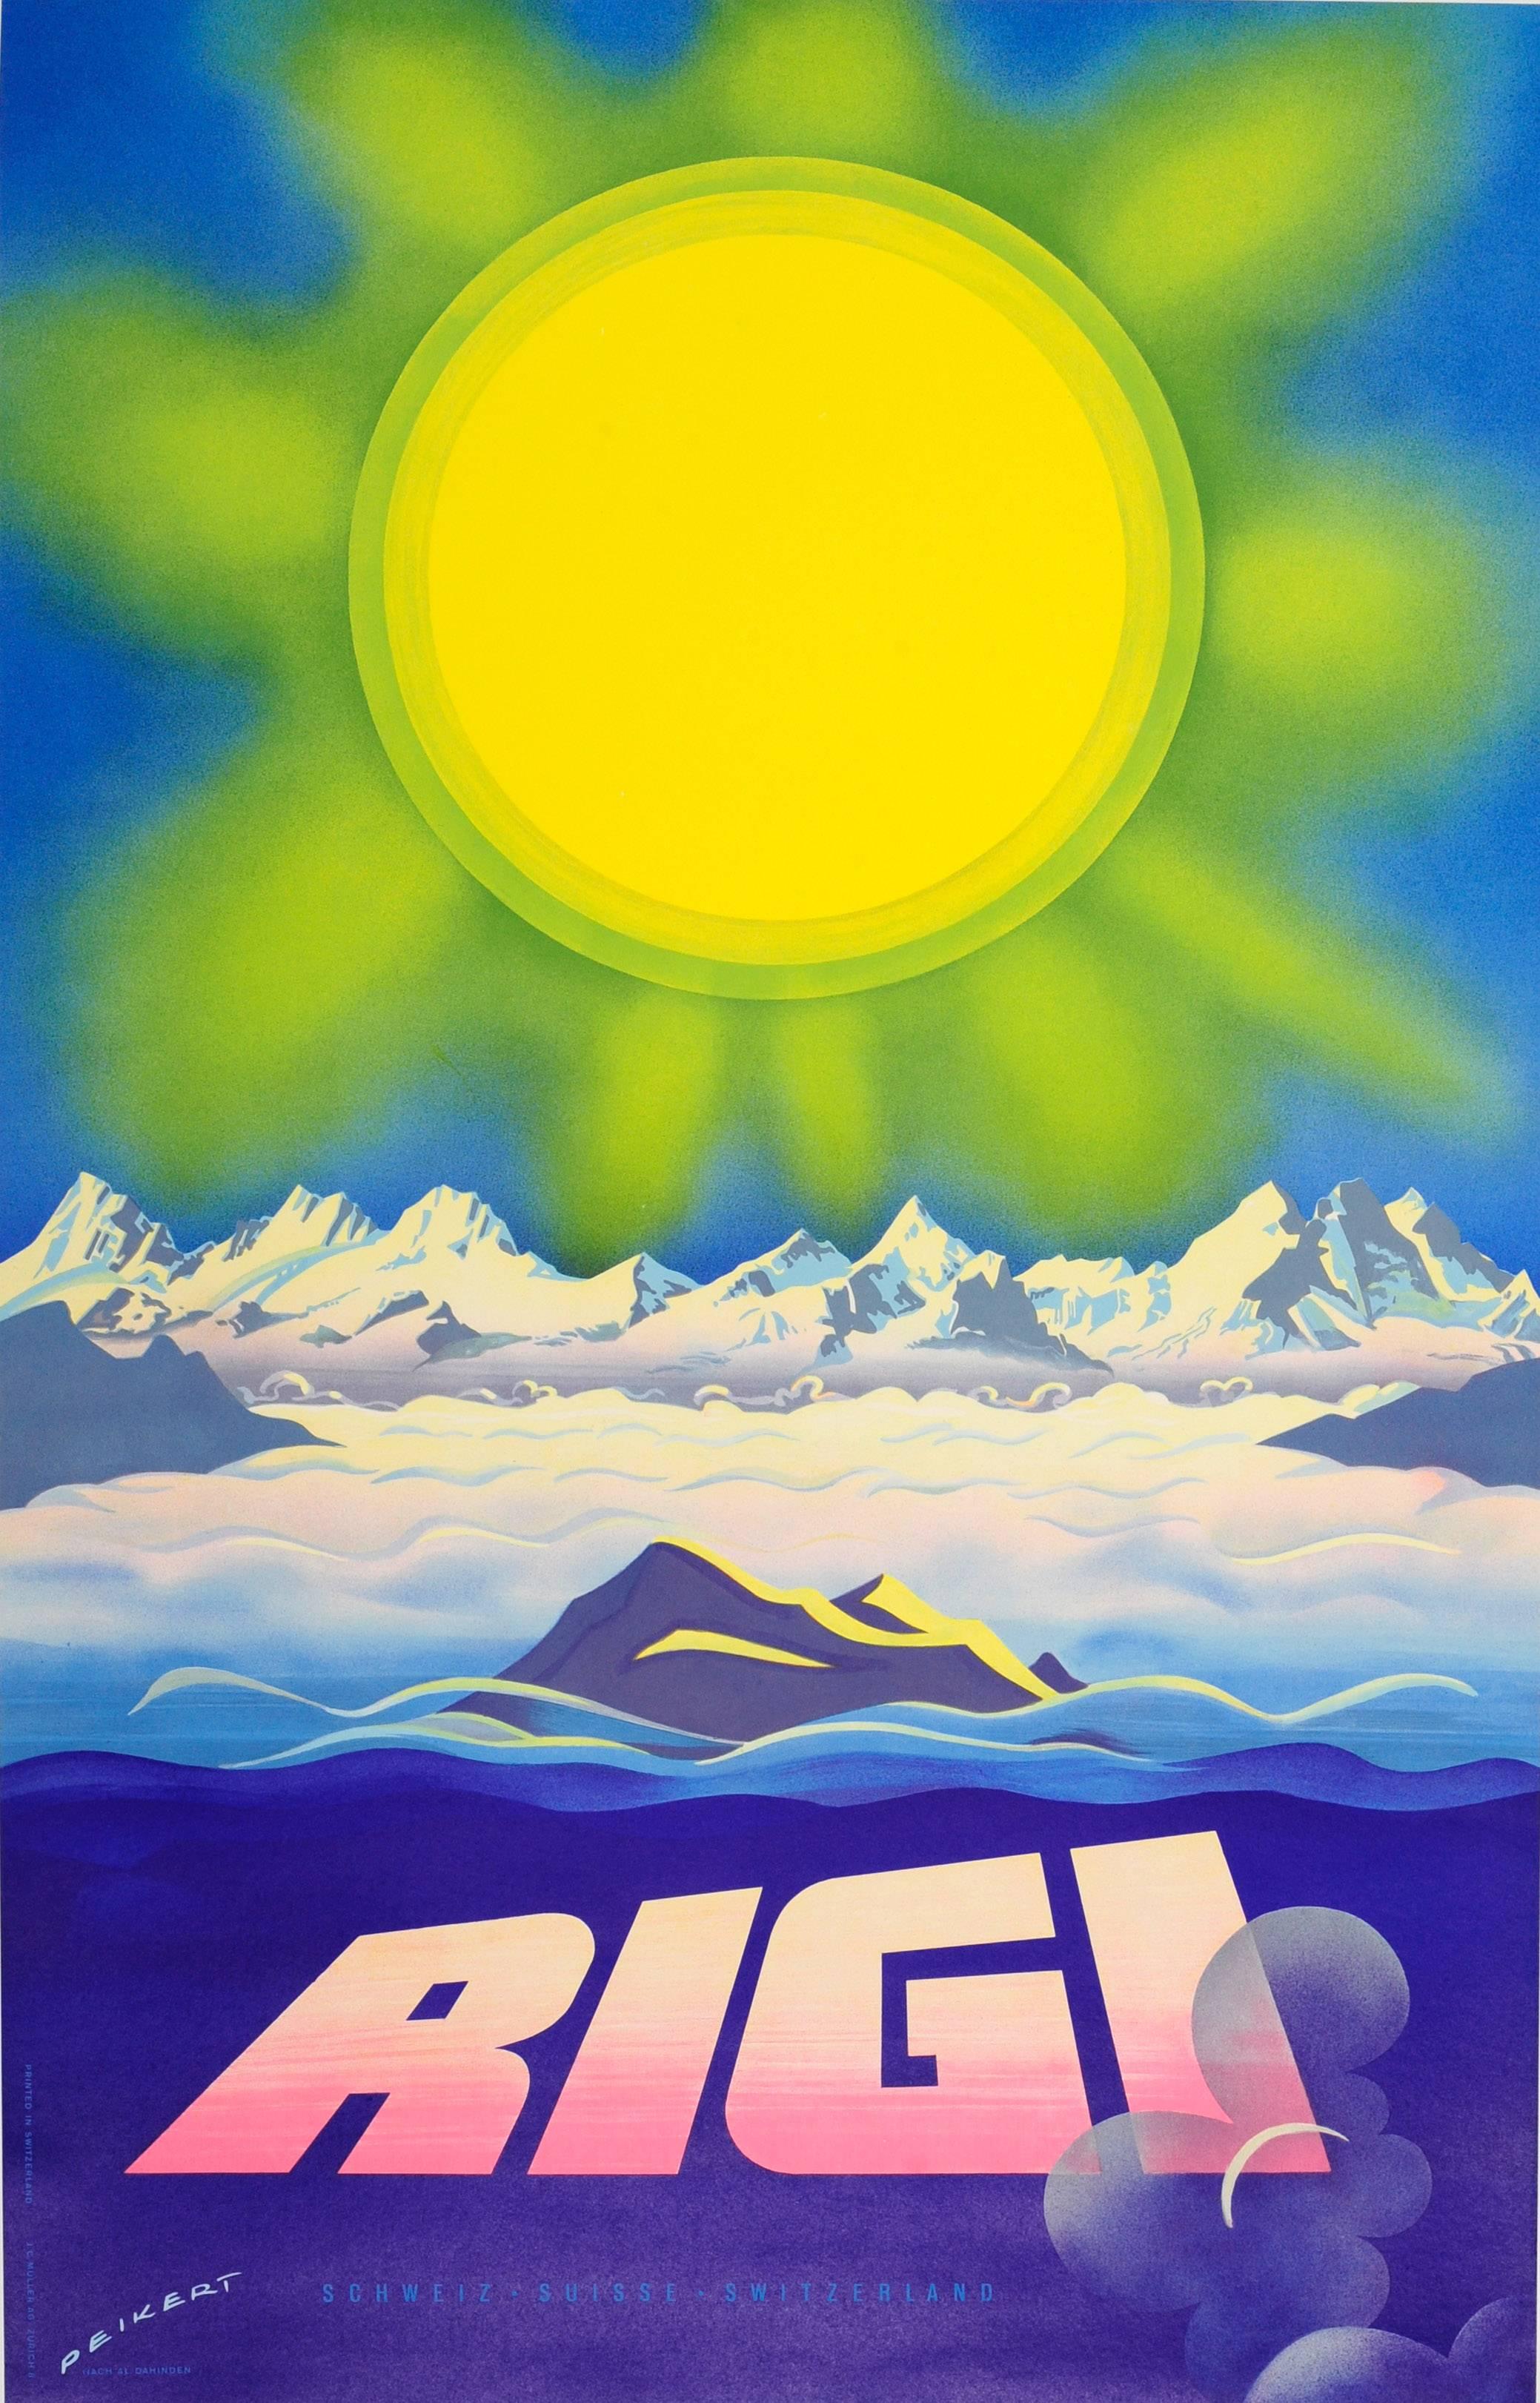 Martin Peikert Print - Original Vintage Travel Poster Advertising Rigi - Mountains In The Swiss Alps